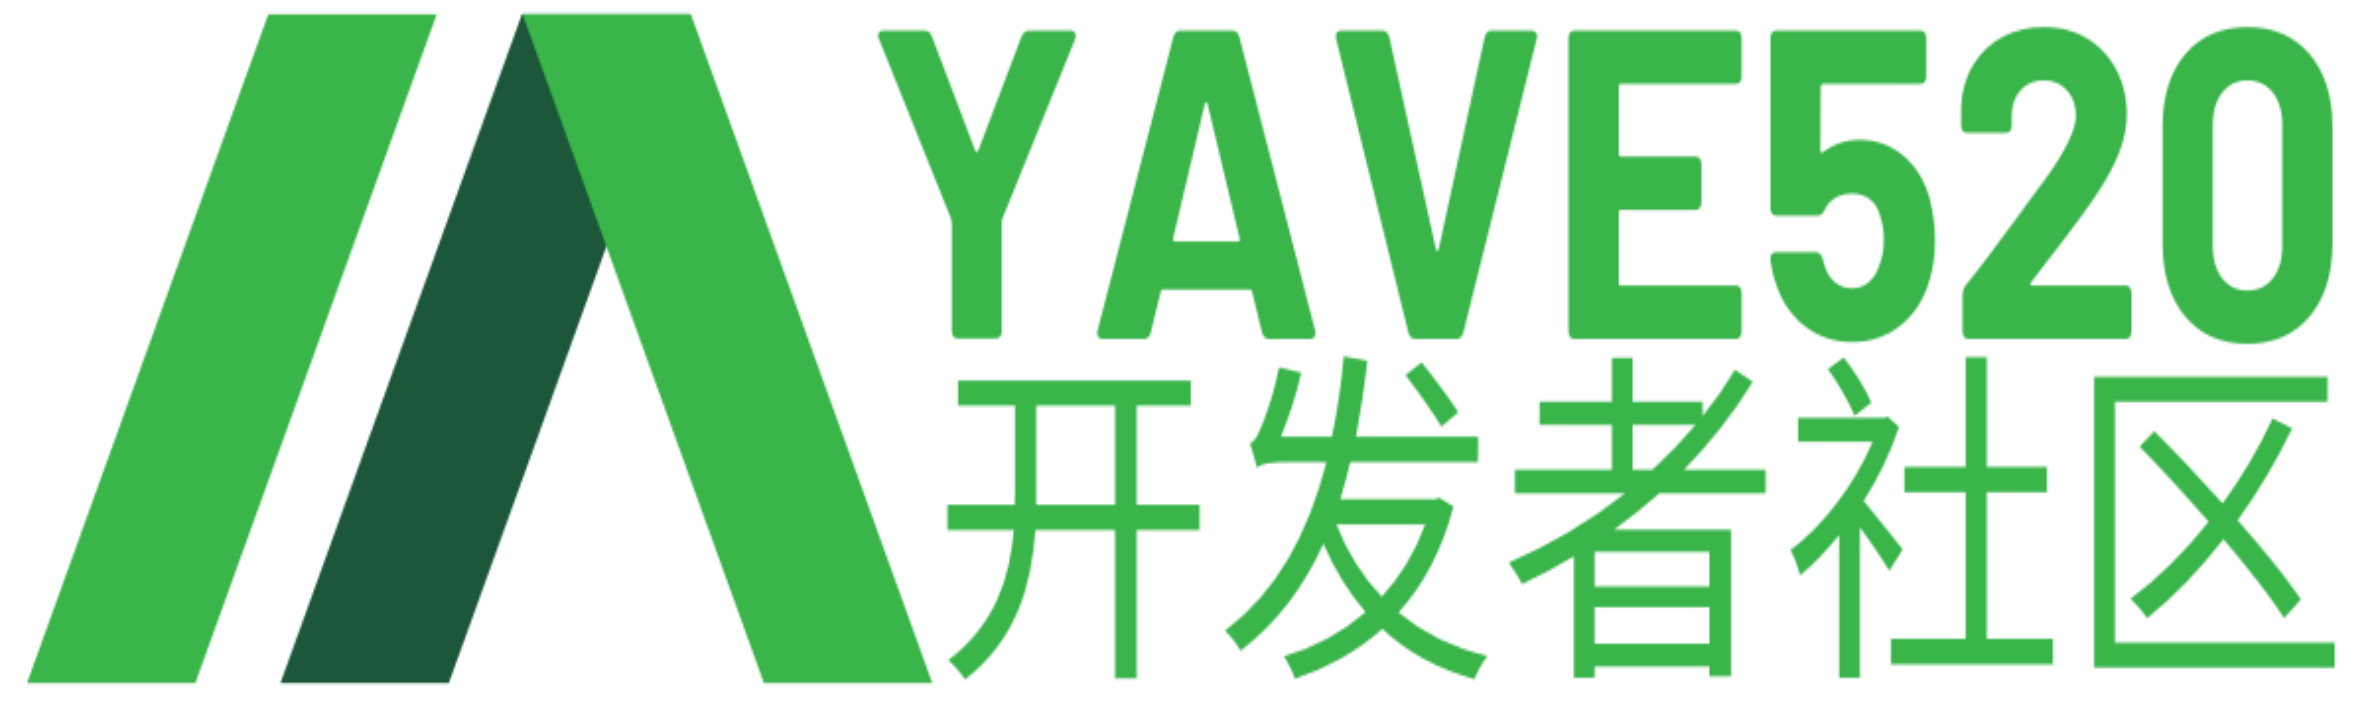 HTML网页底部示例-Yave520-专业开发者社区